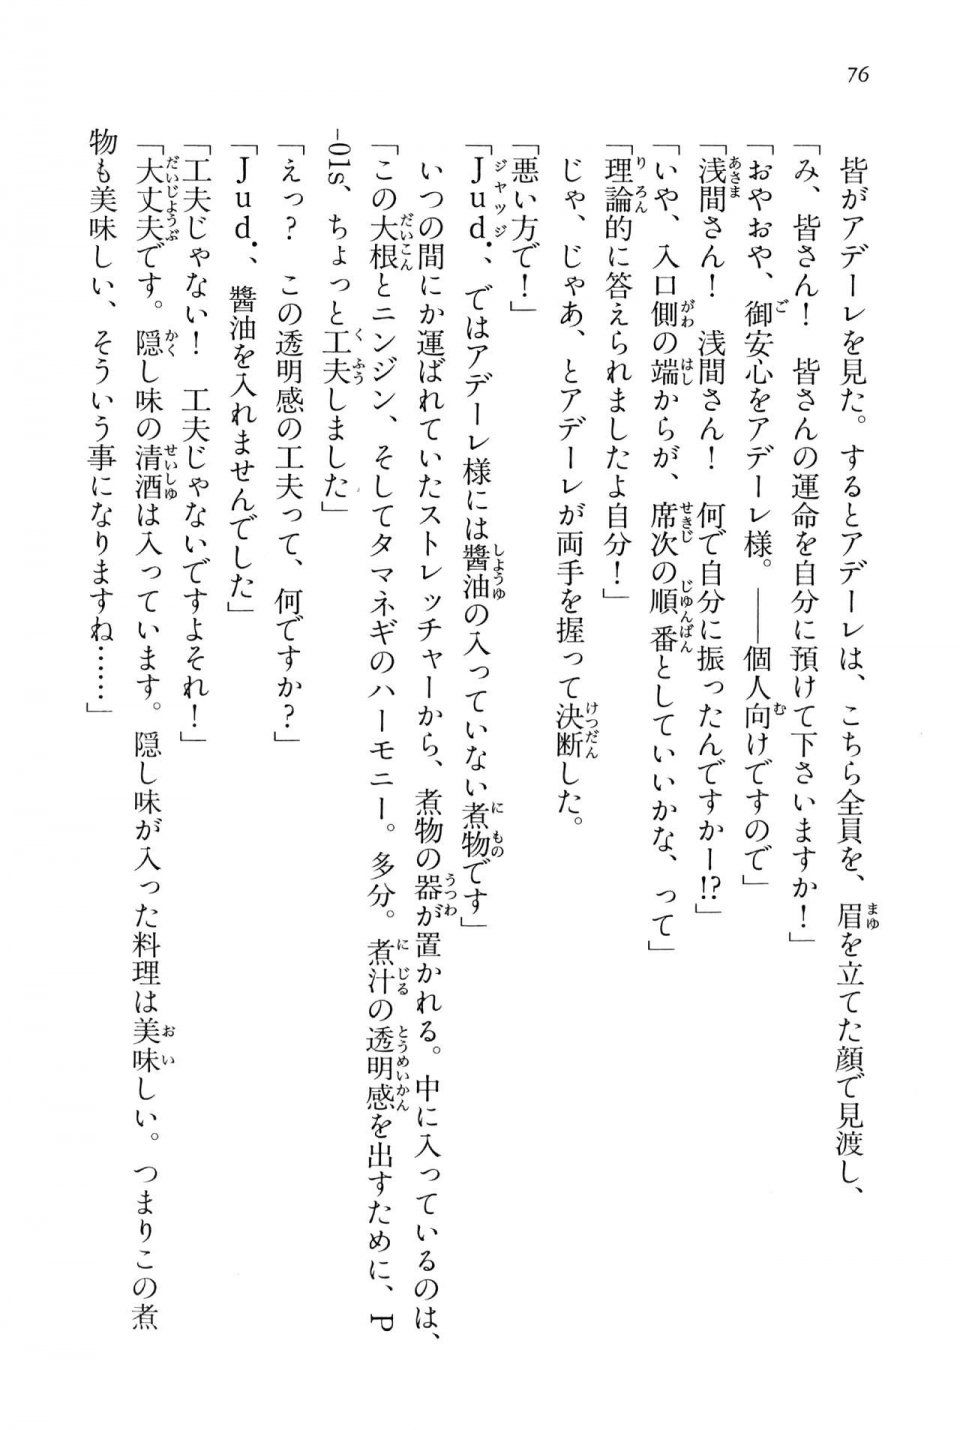 Kyoukai Senjou no Horizon BD Special Mininovel Vol 4(2B) - Photo #80